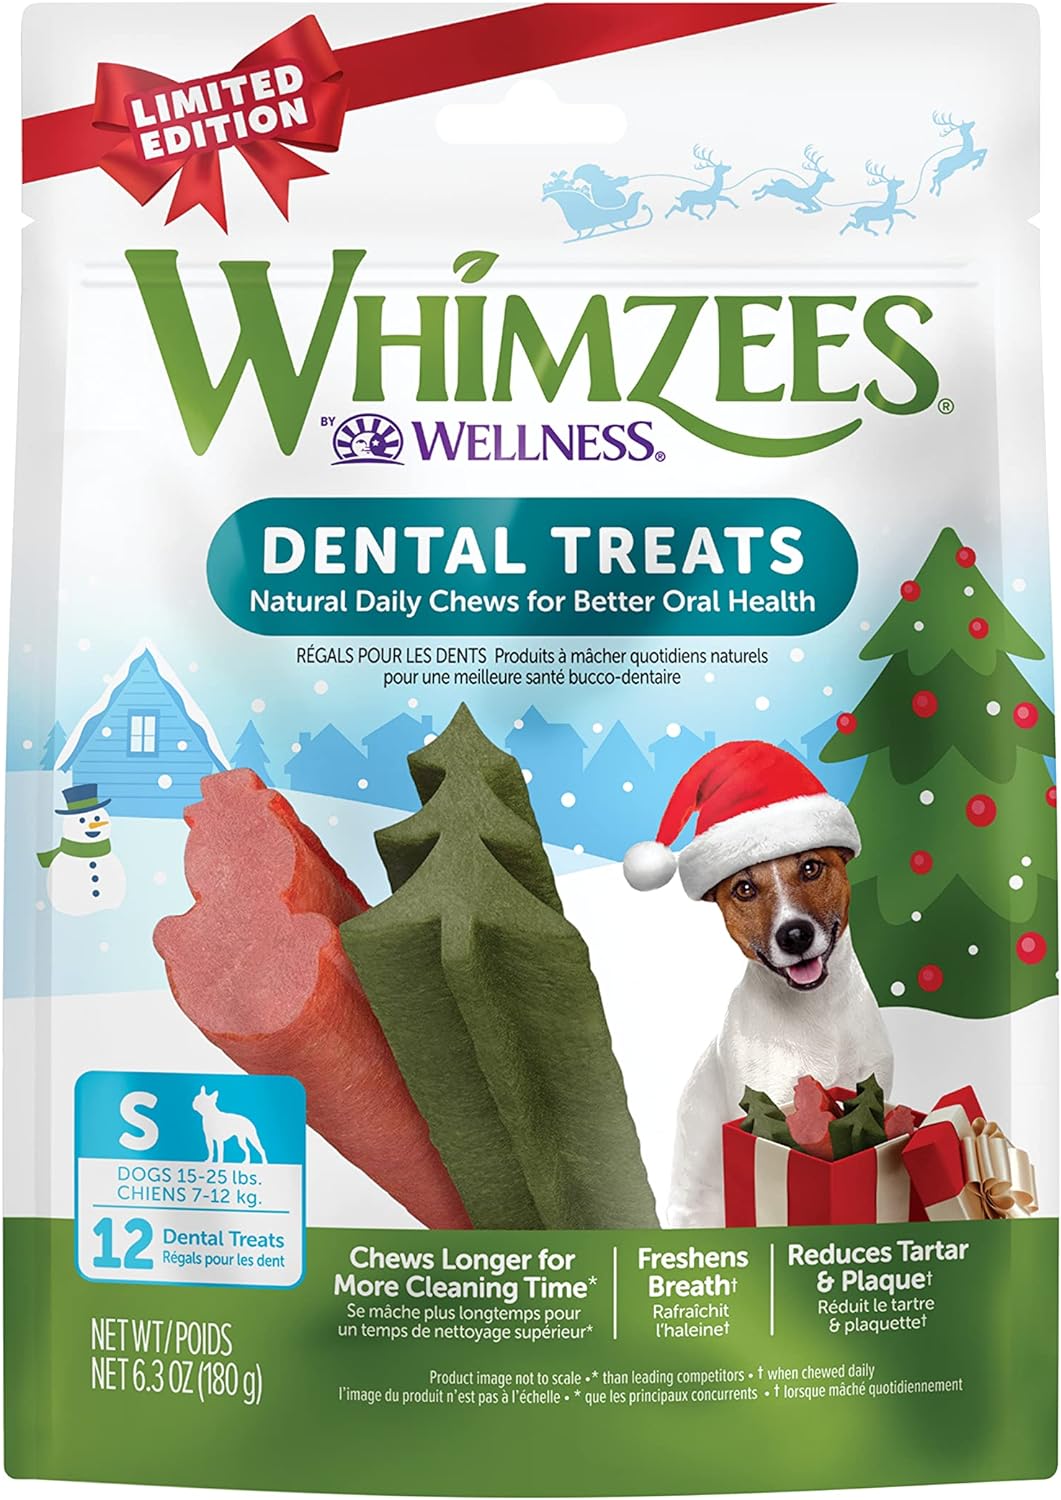 Whimzees Holiday Natural Dental Chews ($9.99)